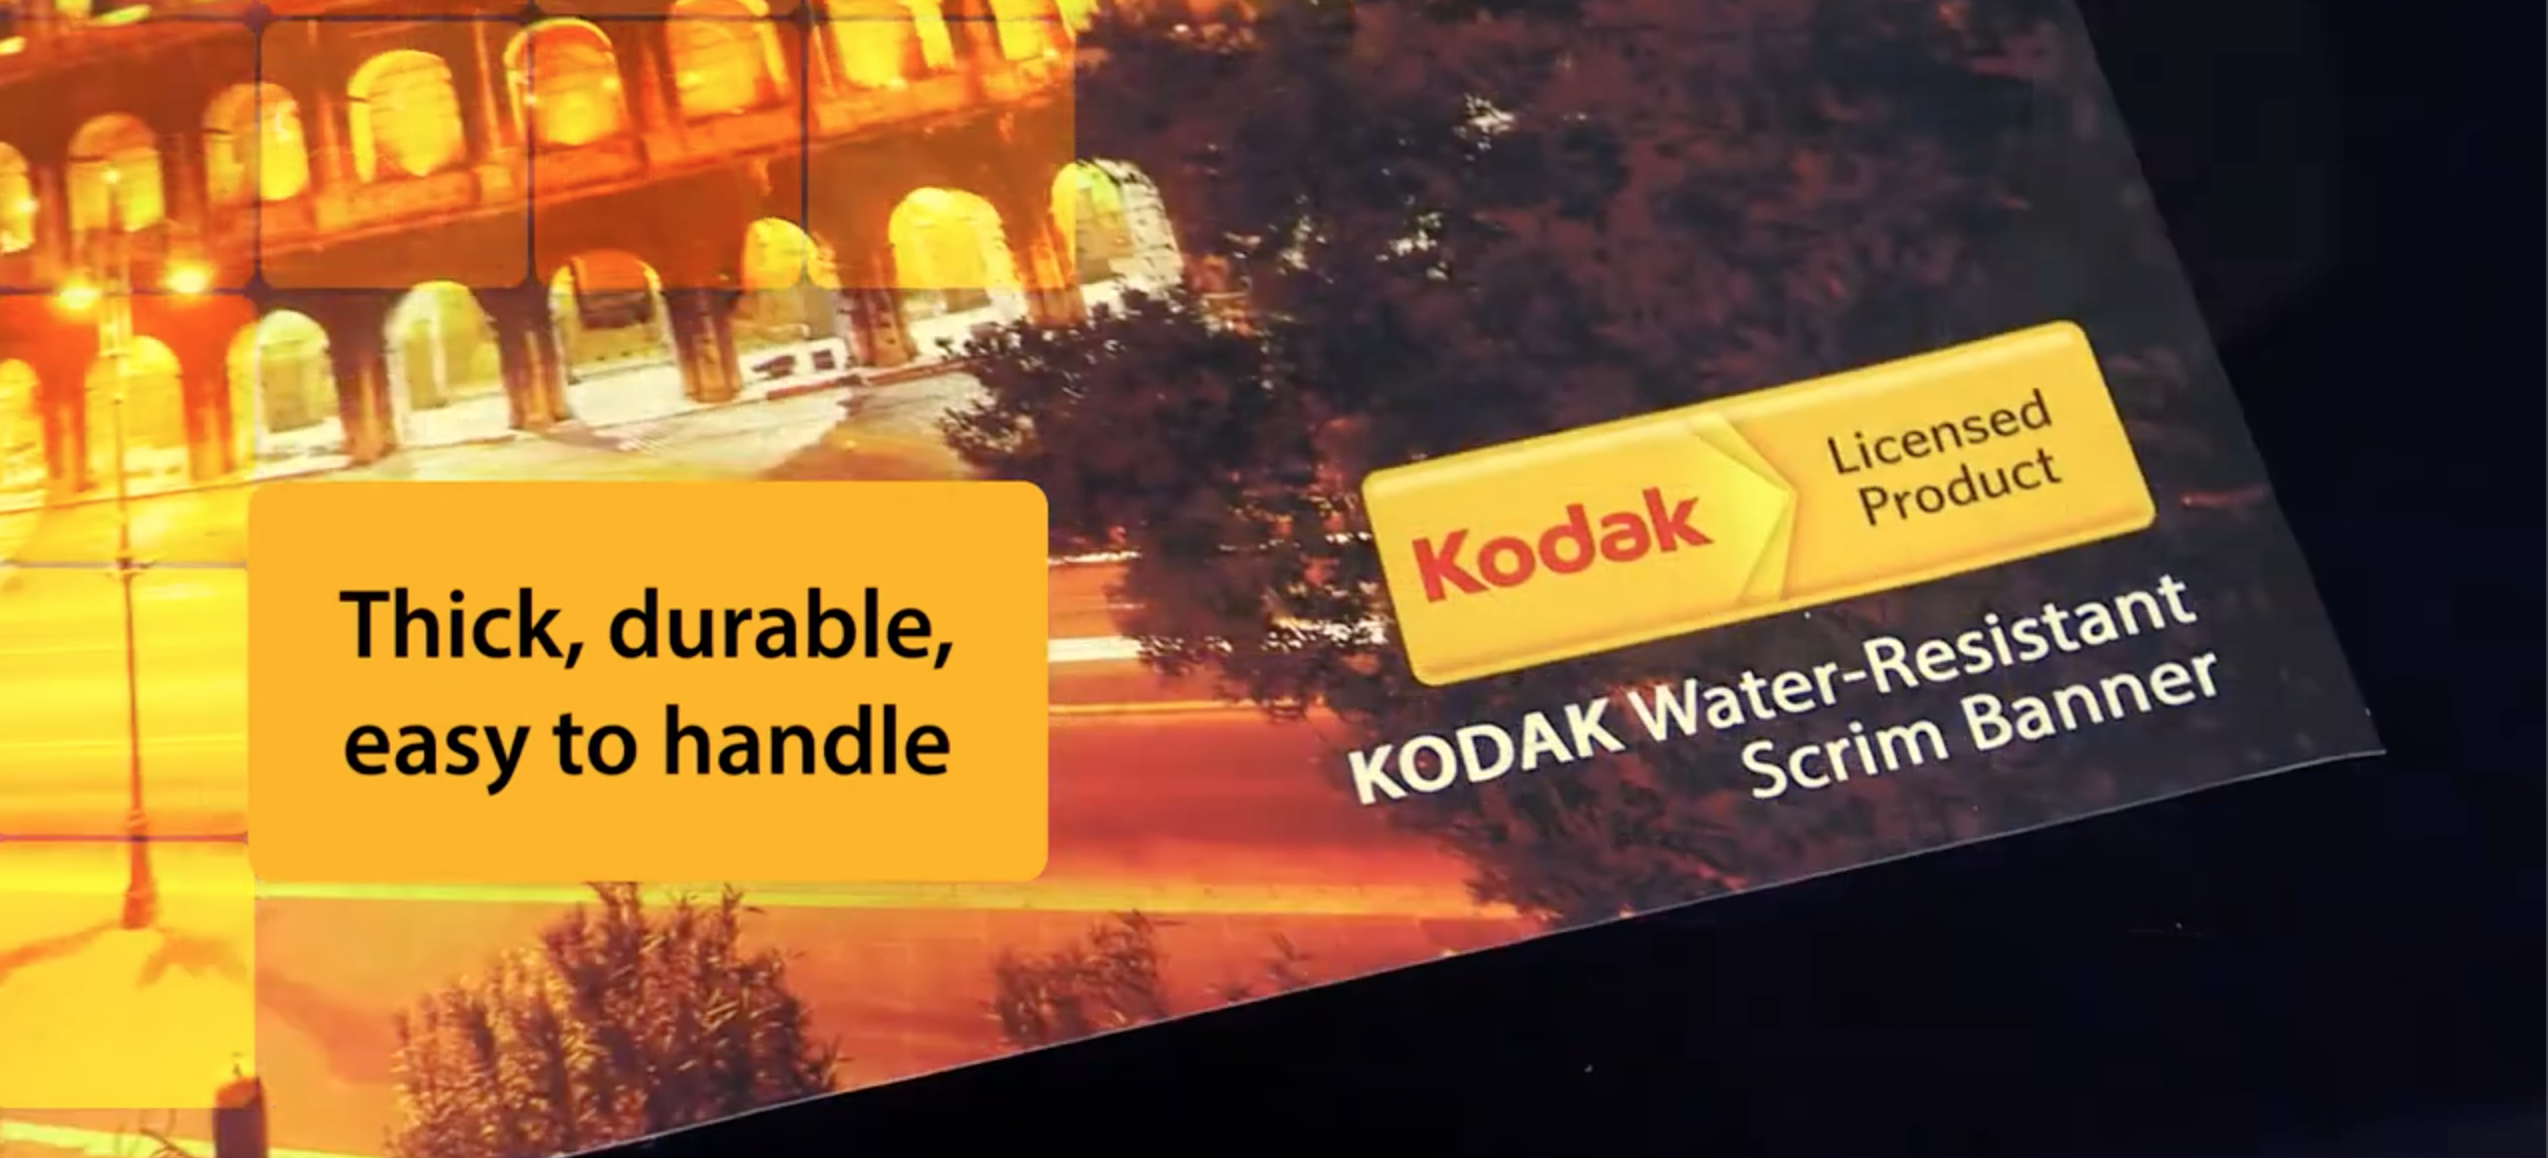 KODAK Water-Resistant Scrim Banner THICK & DURABLE